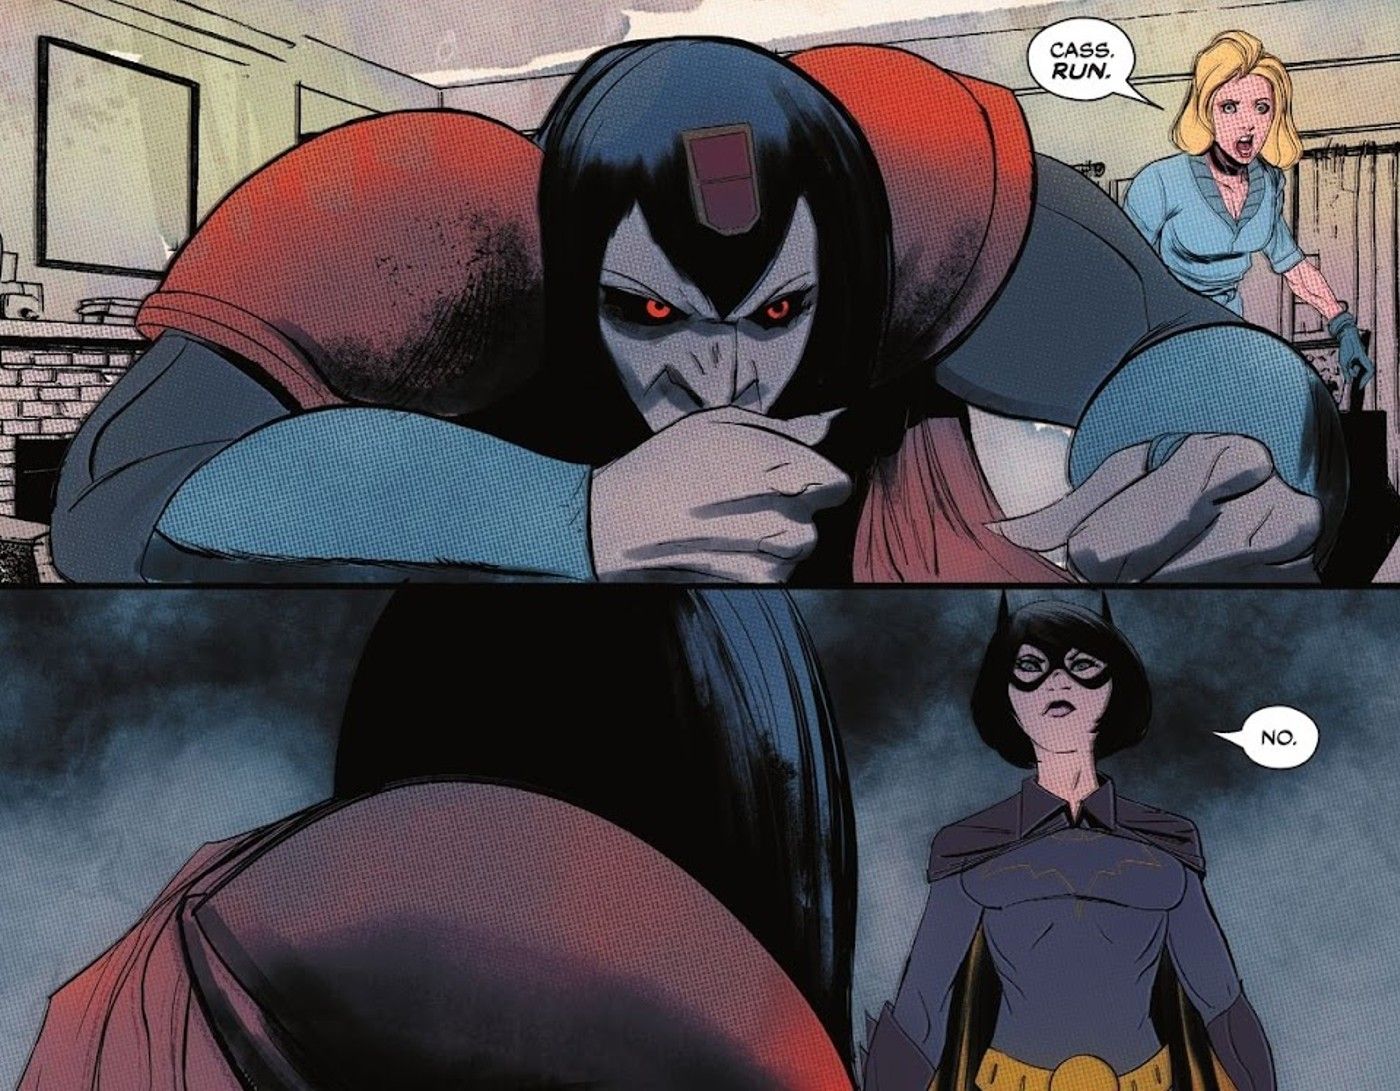 Comic book panels: Batgirl Cassandra Cain refuses to run from a possessed Big Barda.